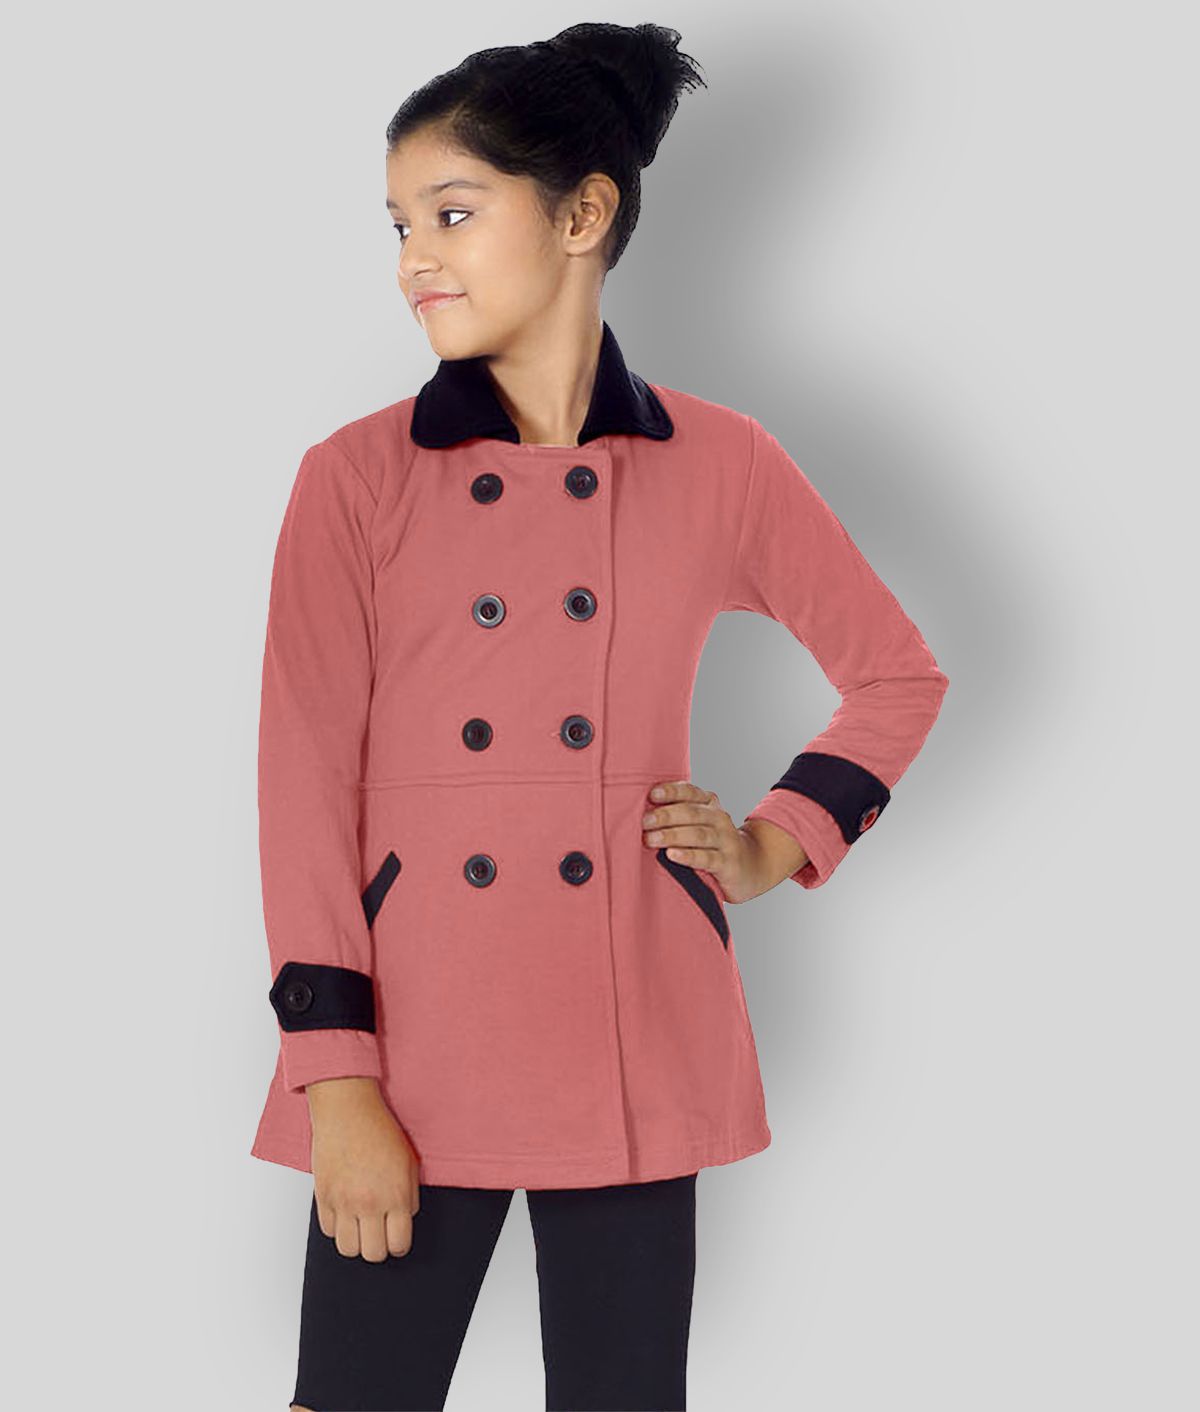     			Naughty Ninos Girls Pink Front Open Fleece Jacket